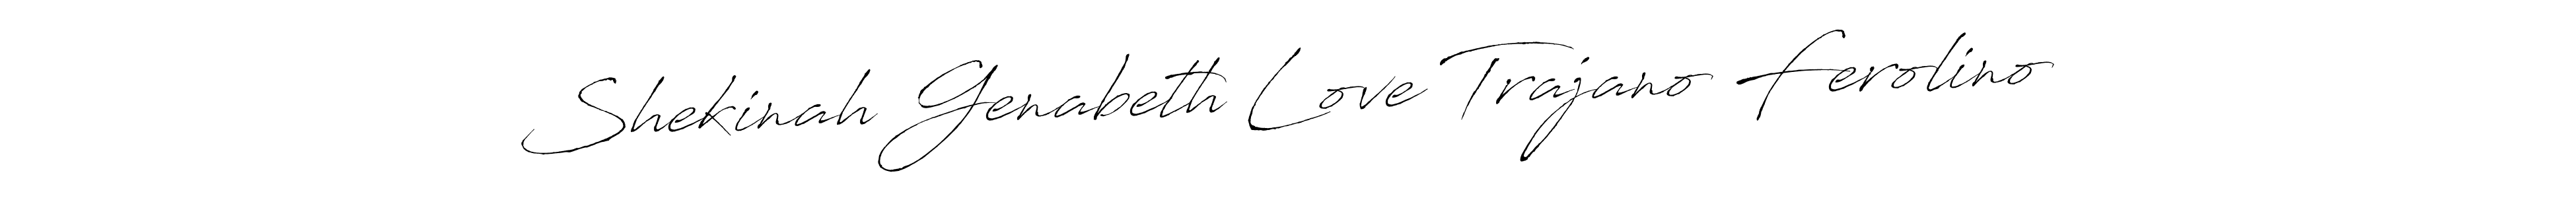 How to Draw Shekinah Genabeth Love Trajano Ferolino signature style? Antro_Vectra is a latest design signature styles for name Shekinah Genabeth Love Trajano Ferolino. Shekinah Genabeth Love Trajano Ferolino signature style 6 images and pictures png